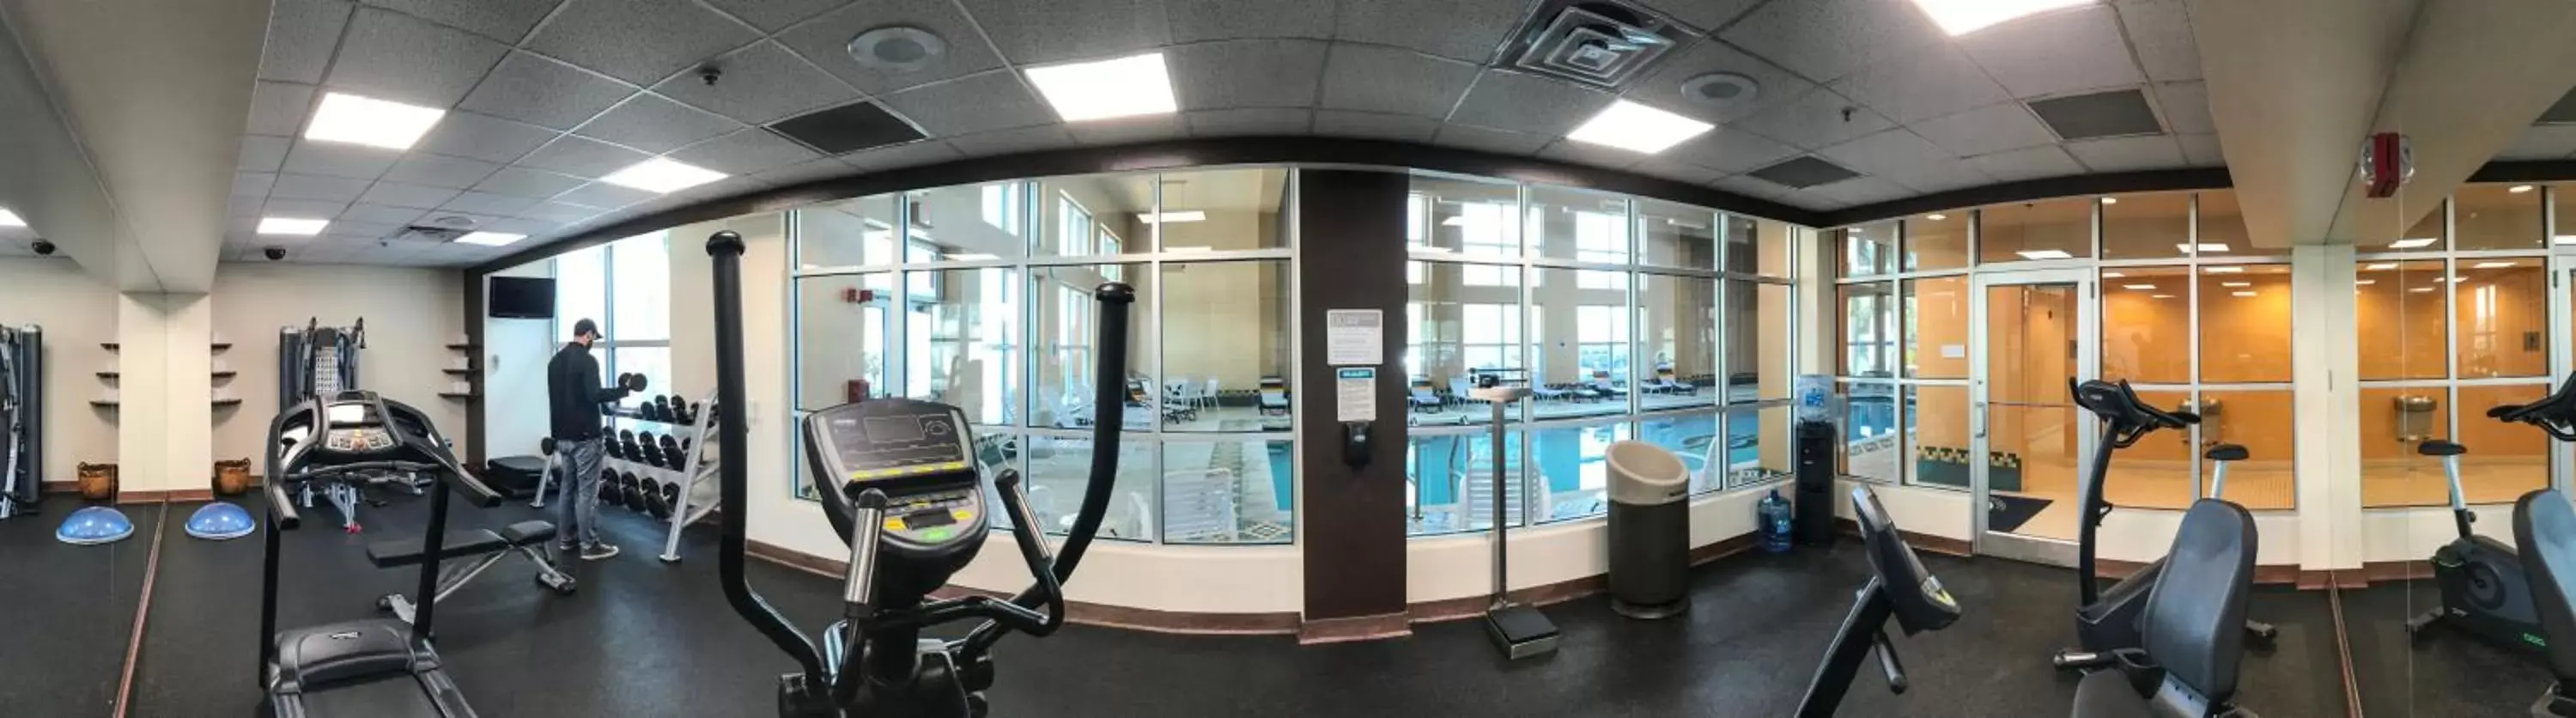 Fitness centre/facilities in Miccosukee Casino & Resort